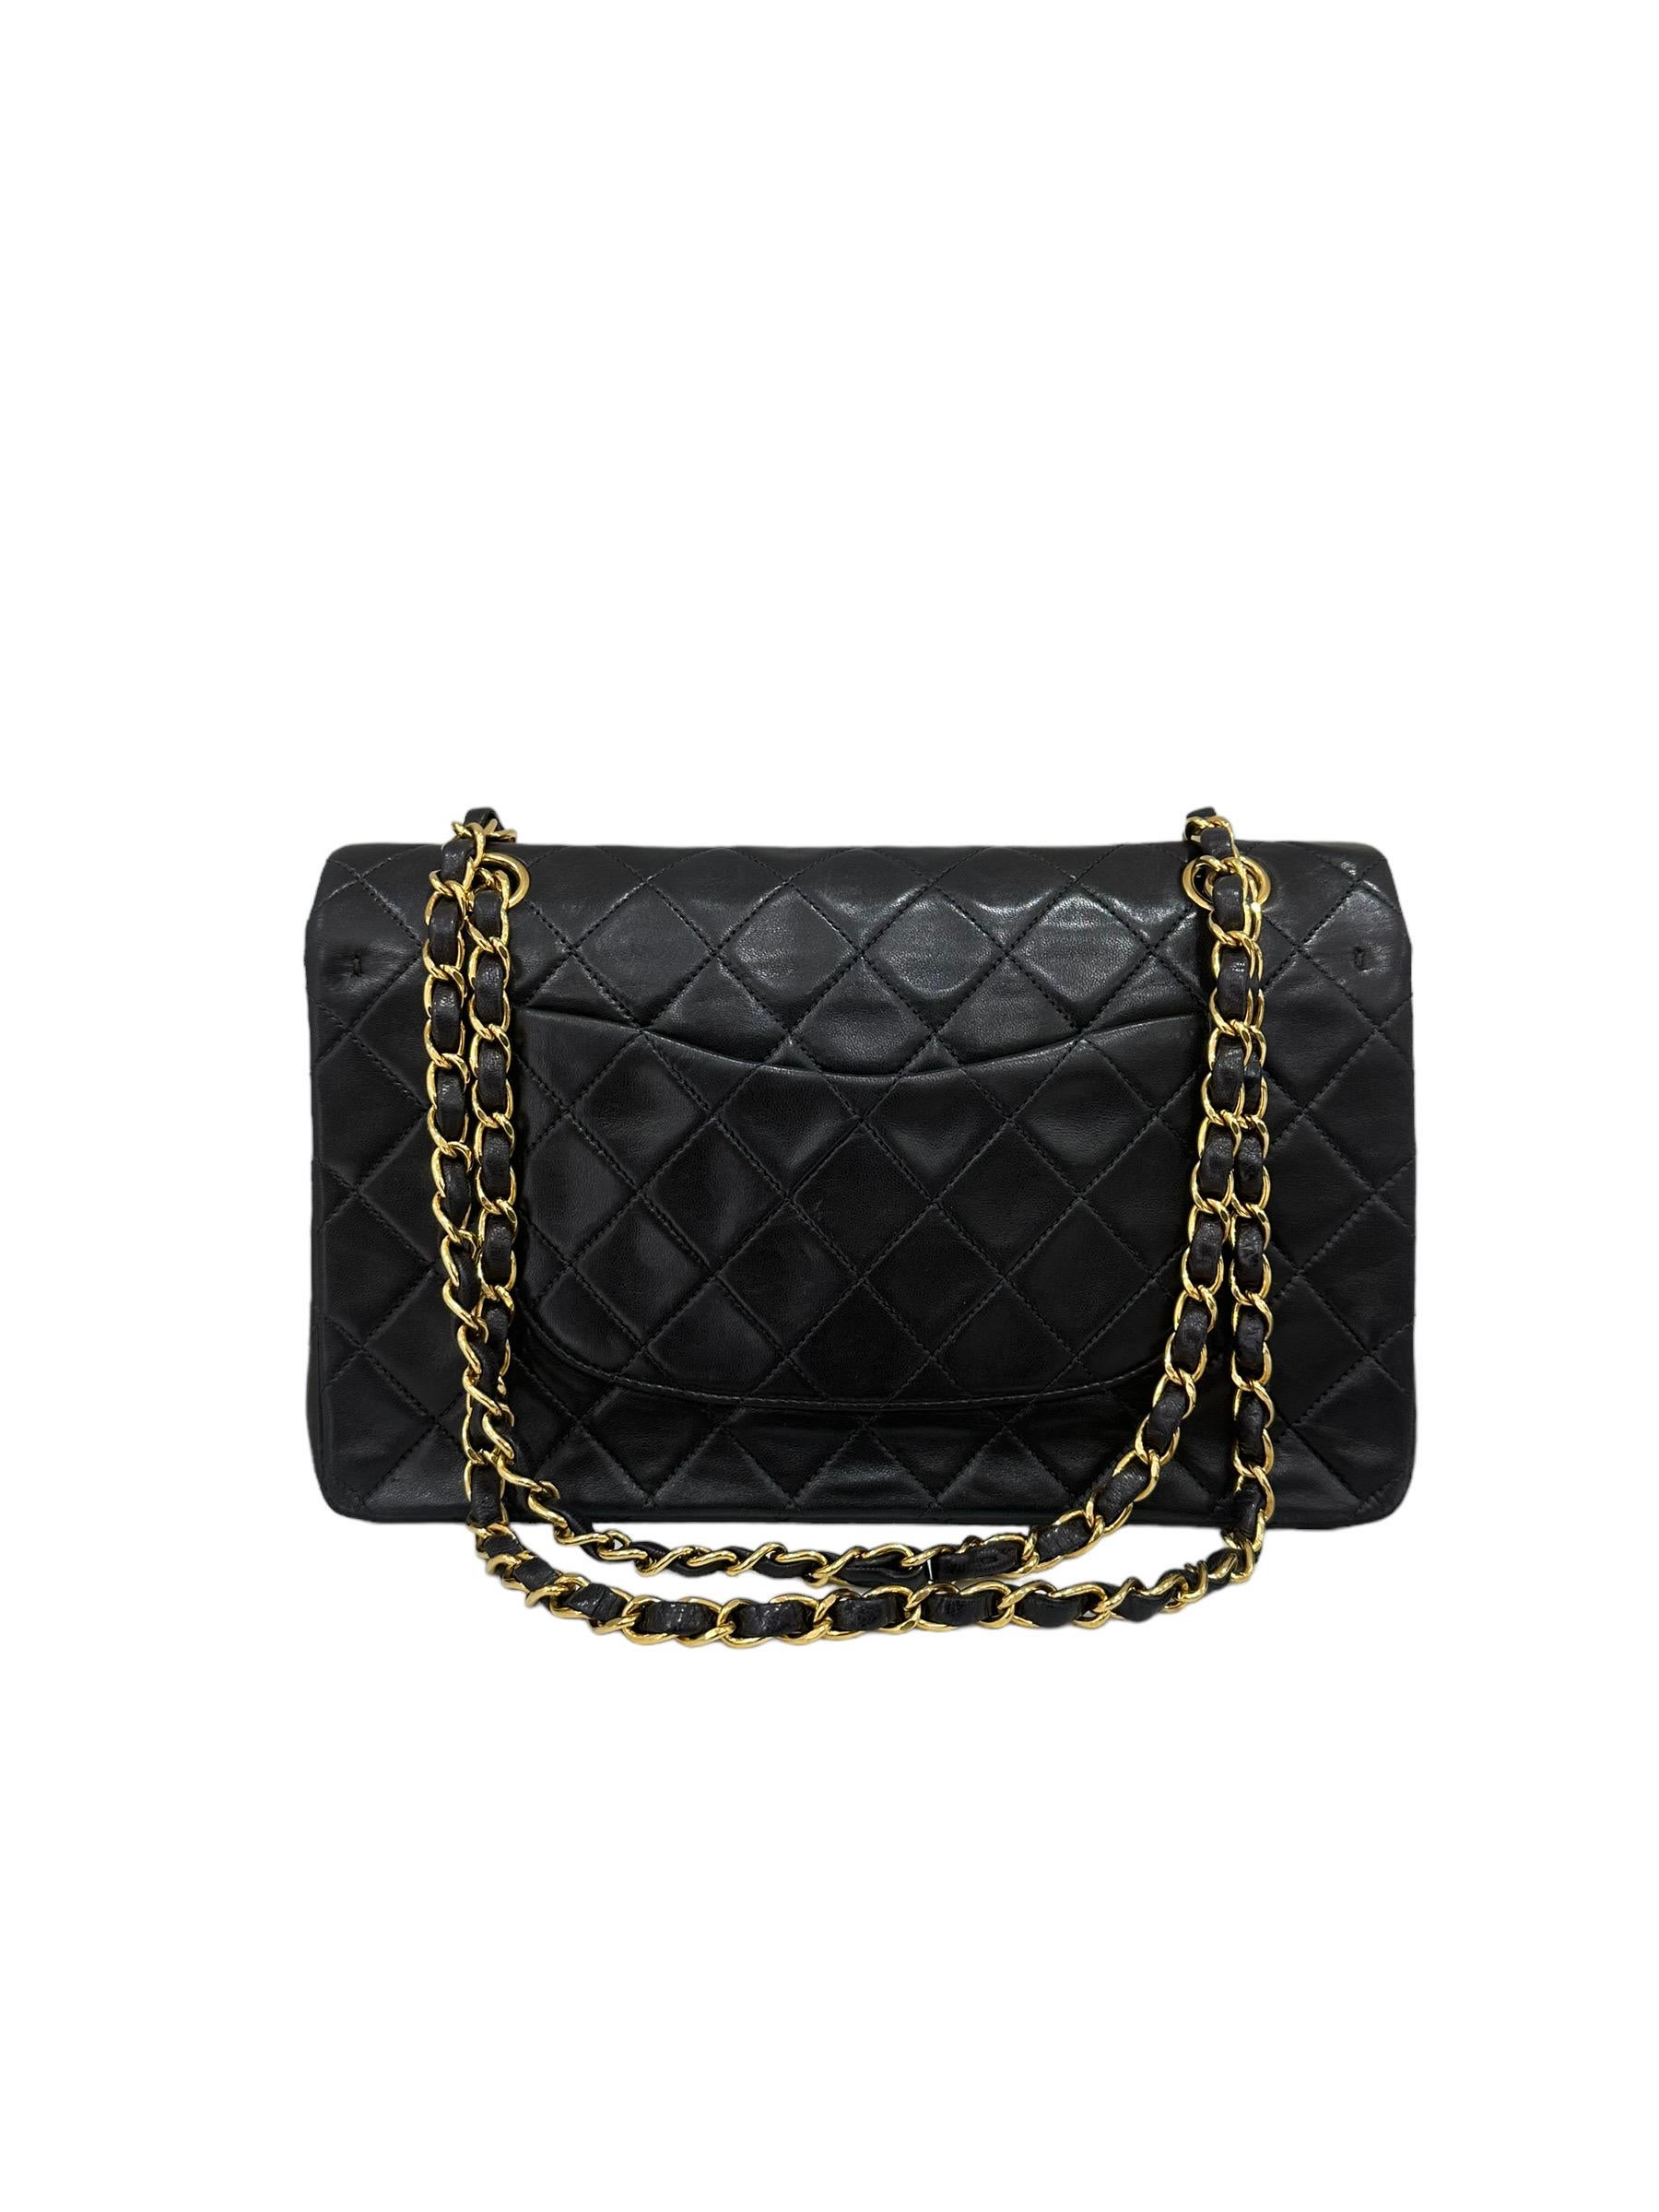 1996 Chanel Timeless Classic 2.55 Black Leather Top Shoulder Bag For Sale 1